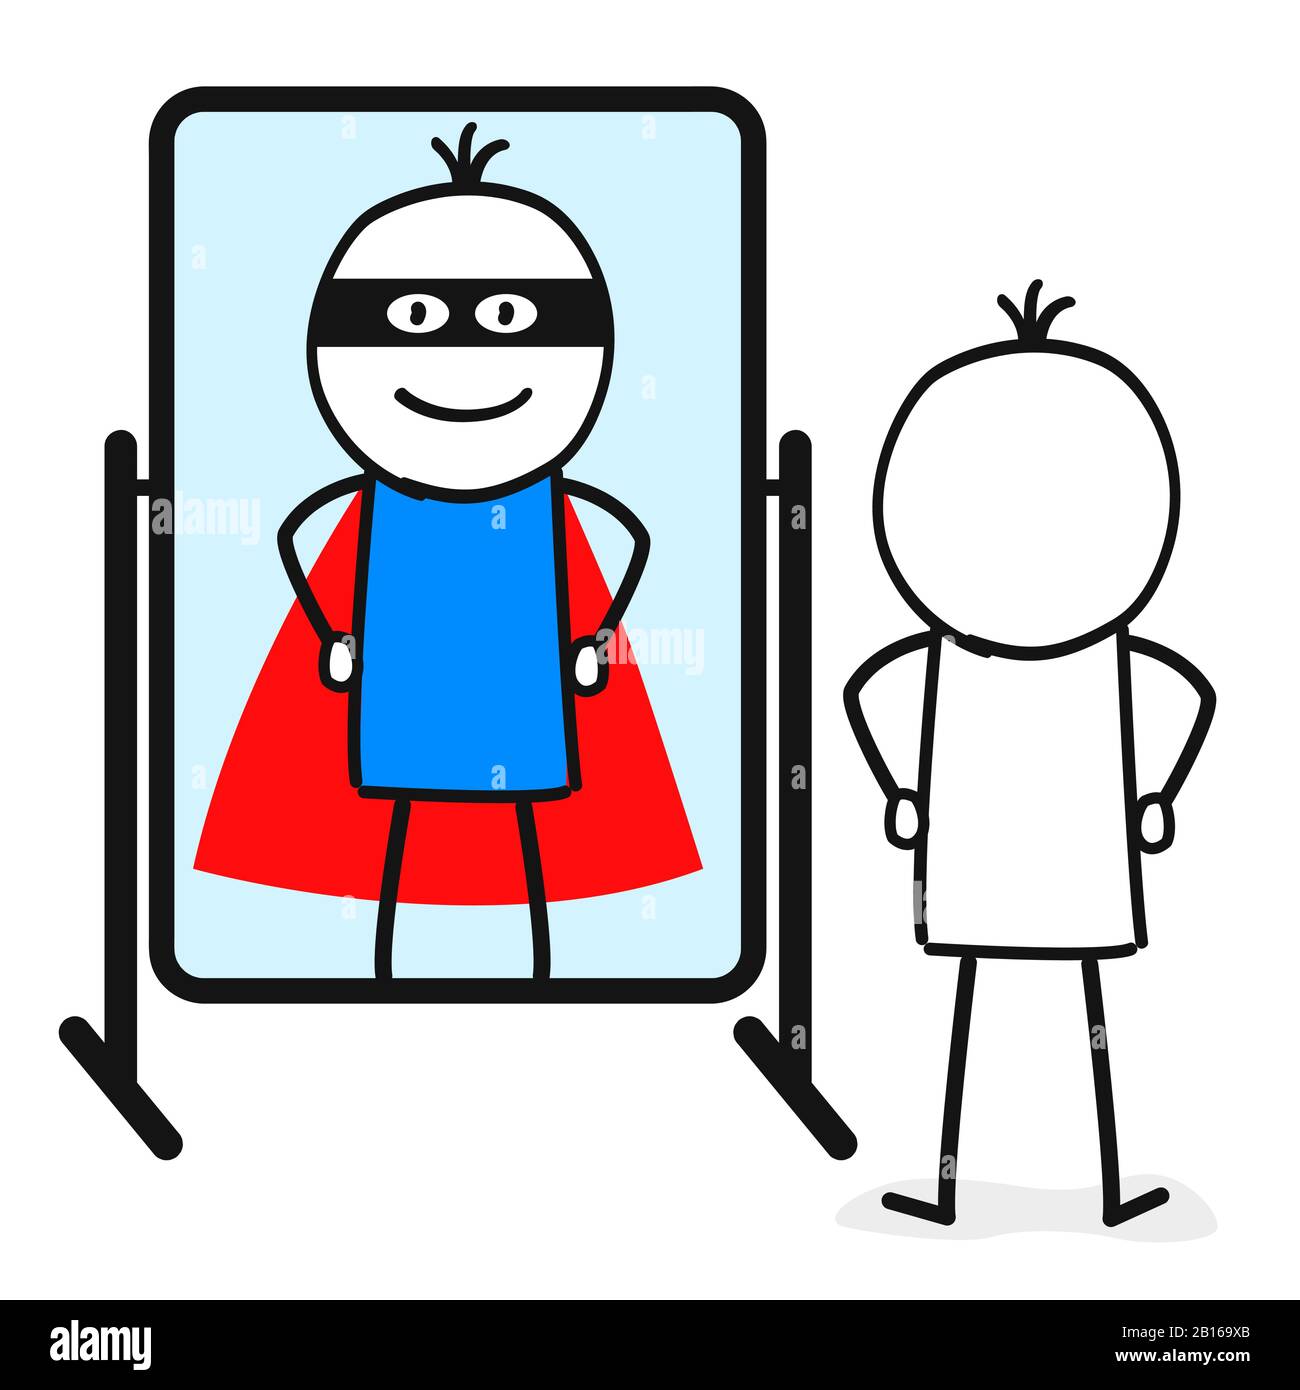 superheroe selfreflection in the mirror Stock Vector